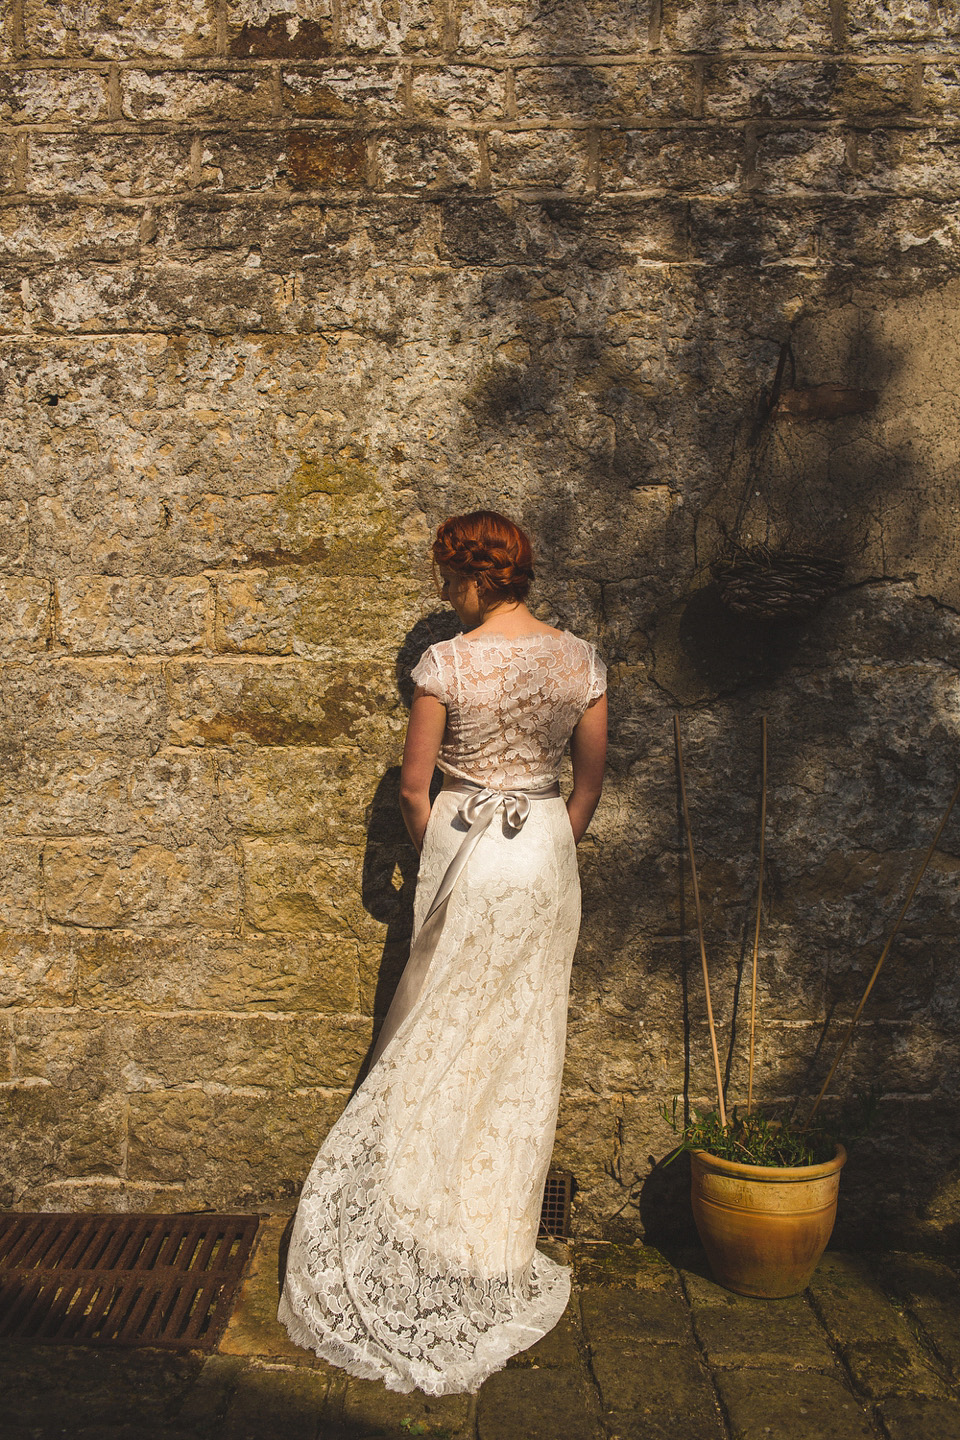 Kate Beaumont - Bespoke, vintage inspired wedding dresses, handmade in Sheffield, Yorkshire, England.